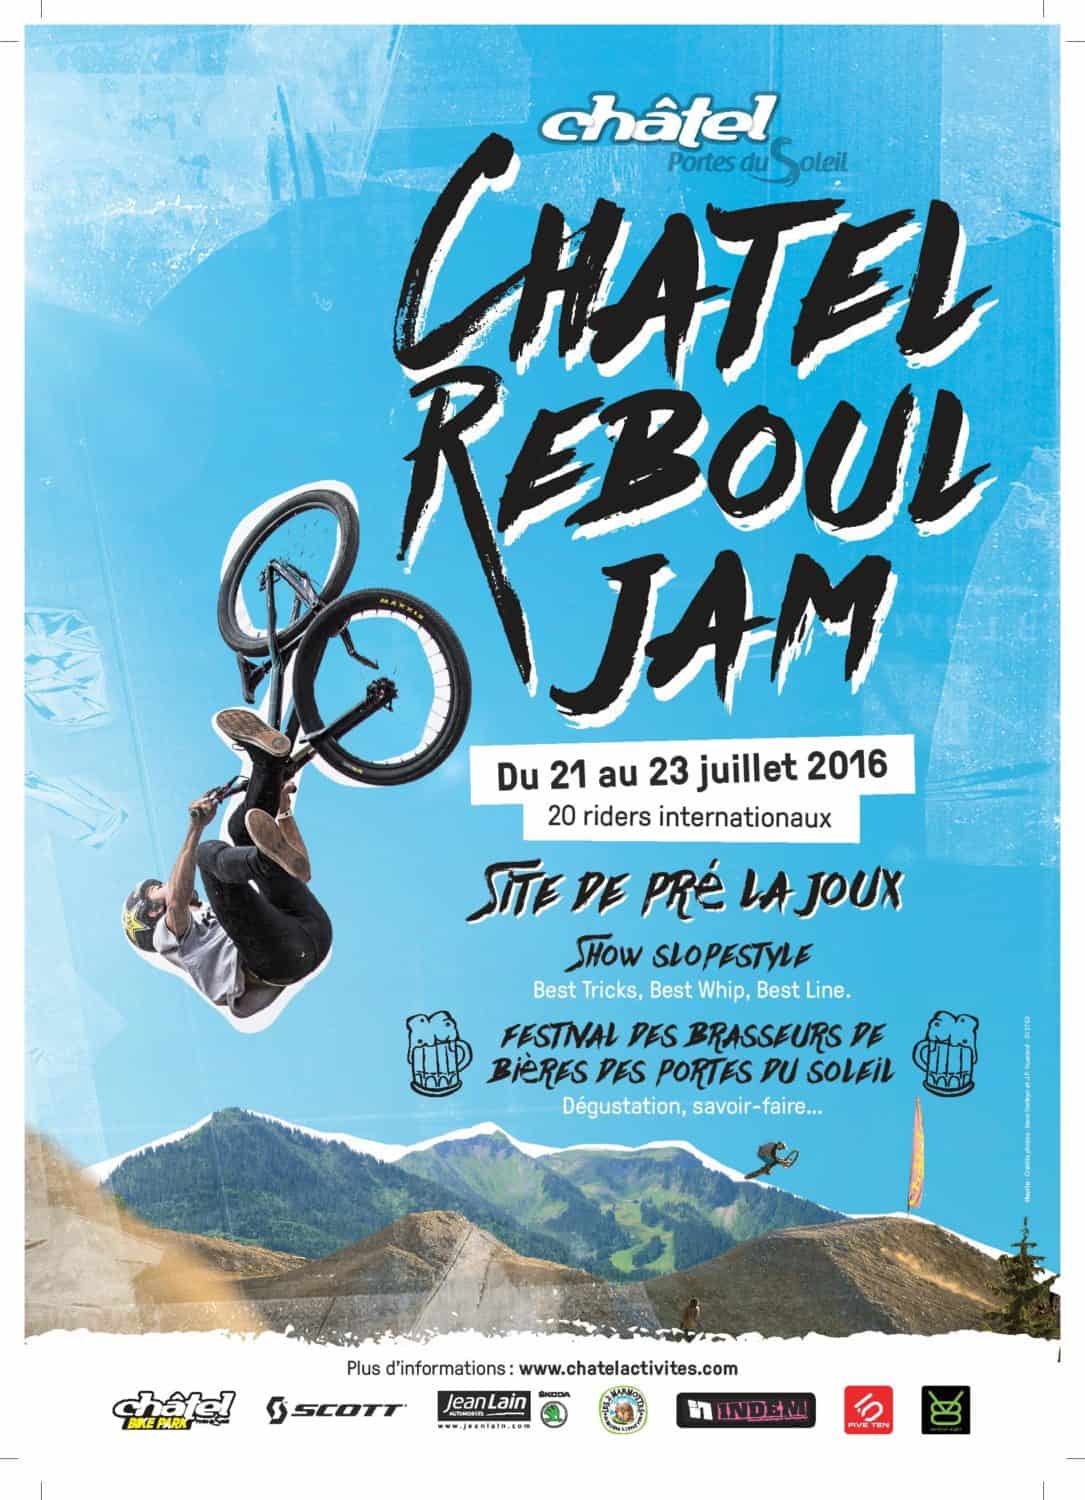 Portes du soleil mountain bikers head to the Chatel Reboul Jam poster